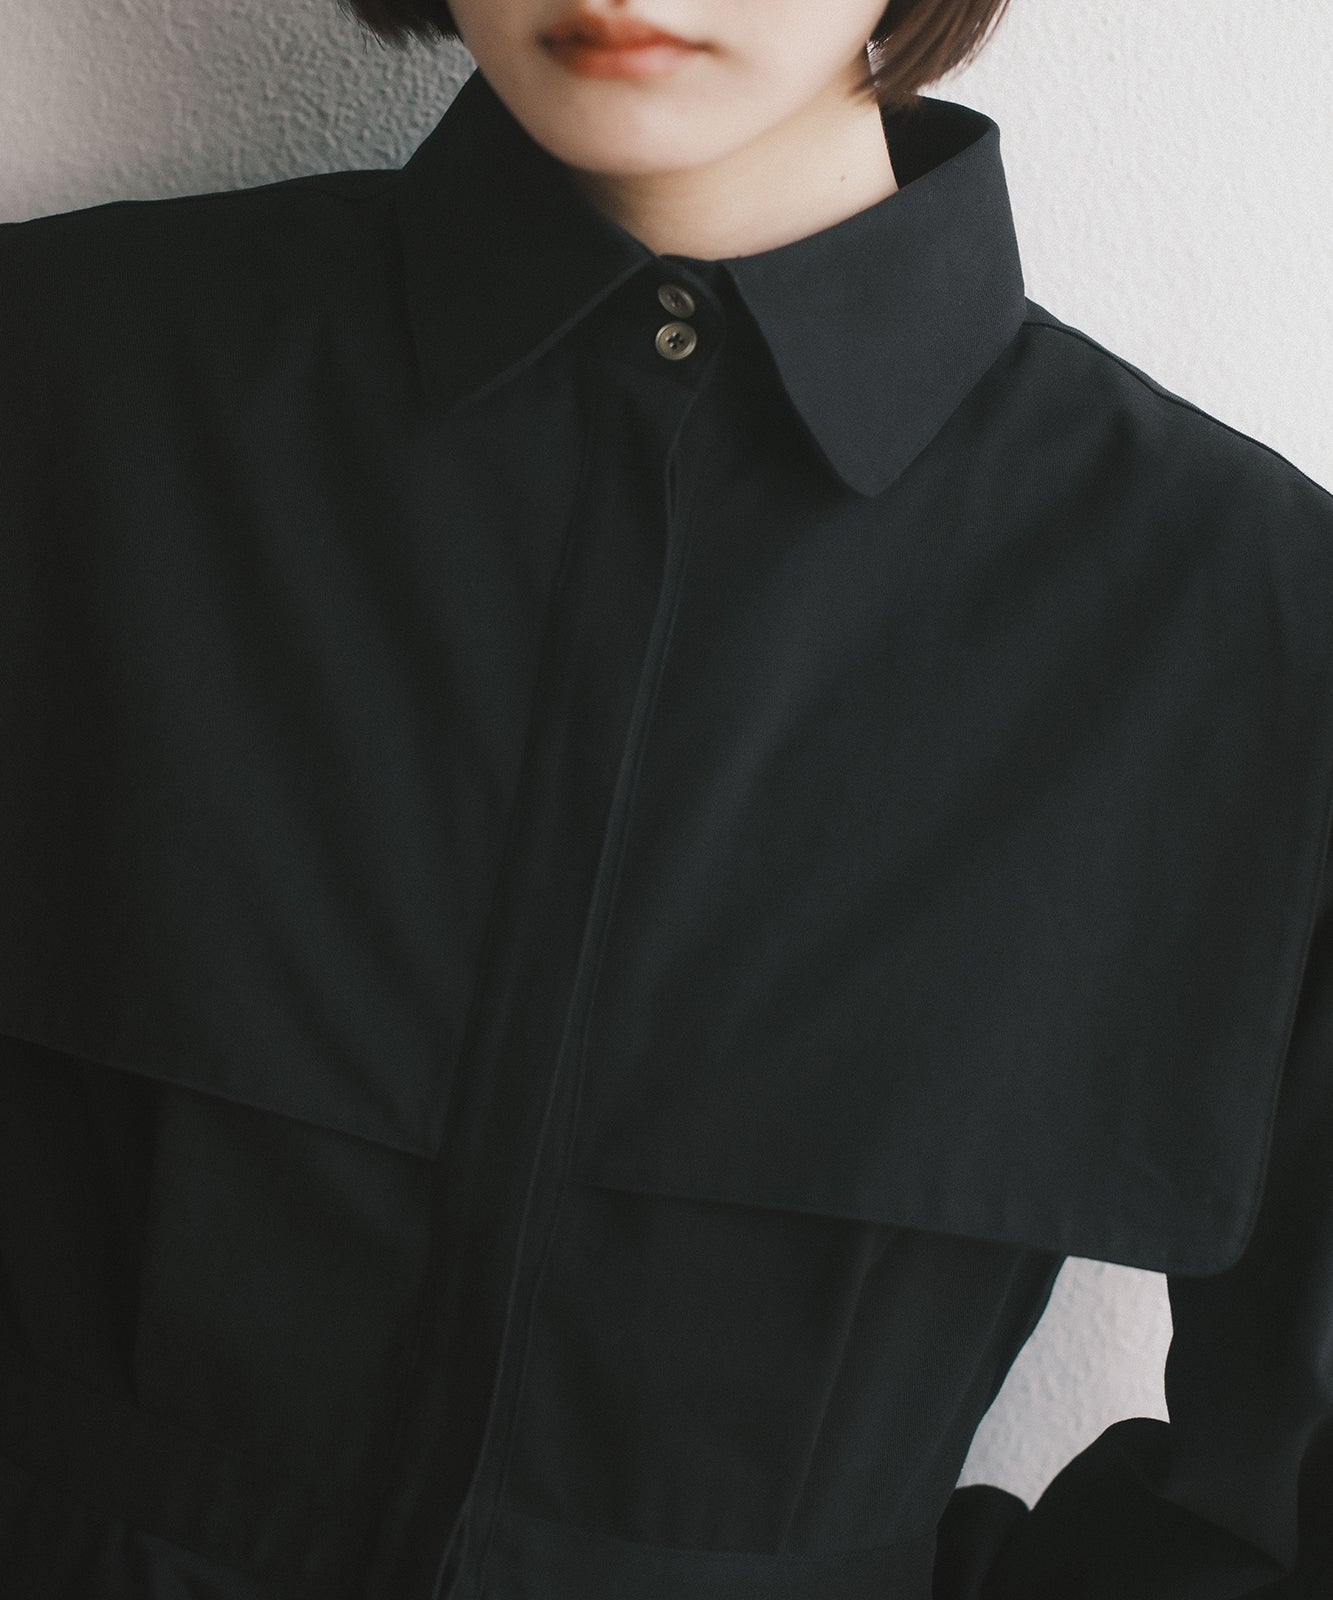 ≪在庫販売≫【THE DRESS #39】- black peplum dress -（ブラック ...